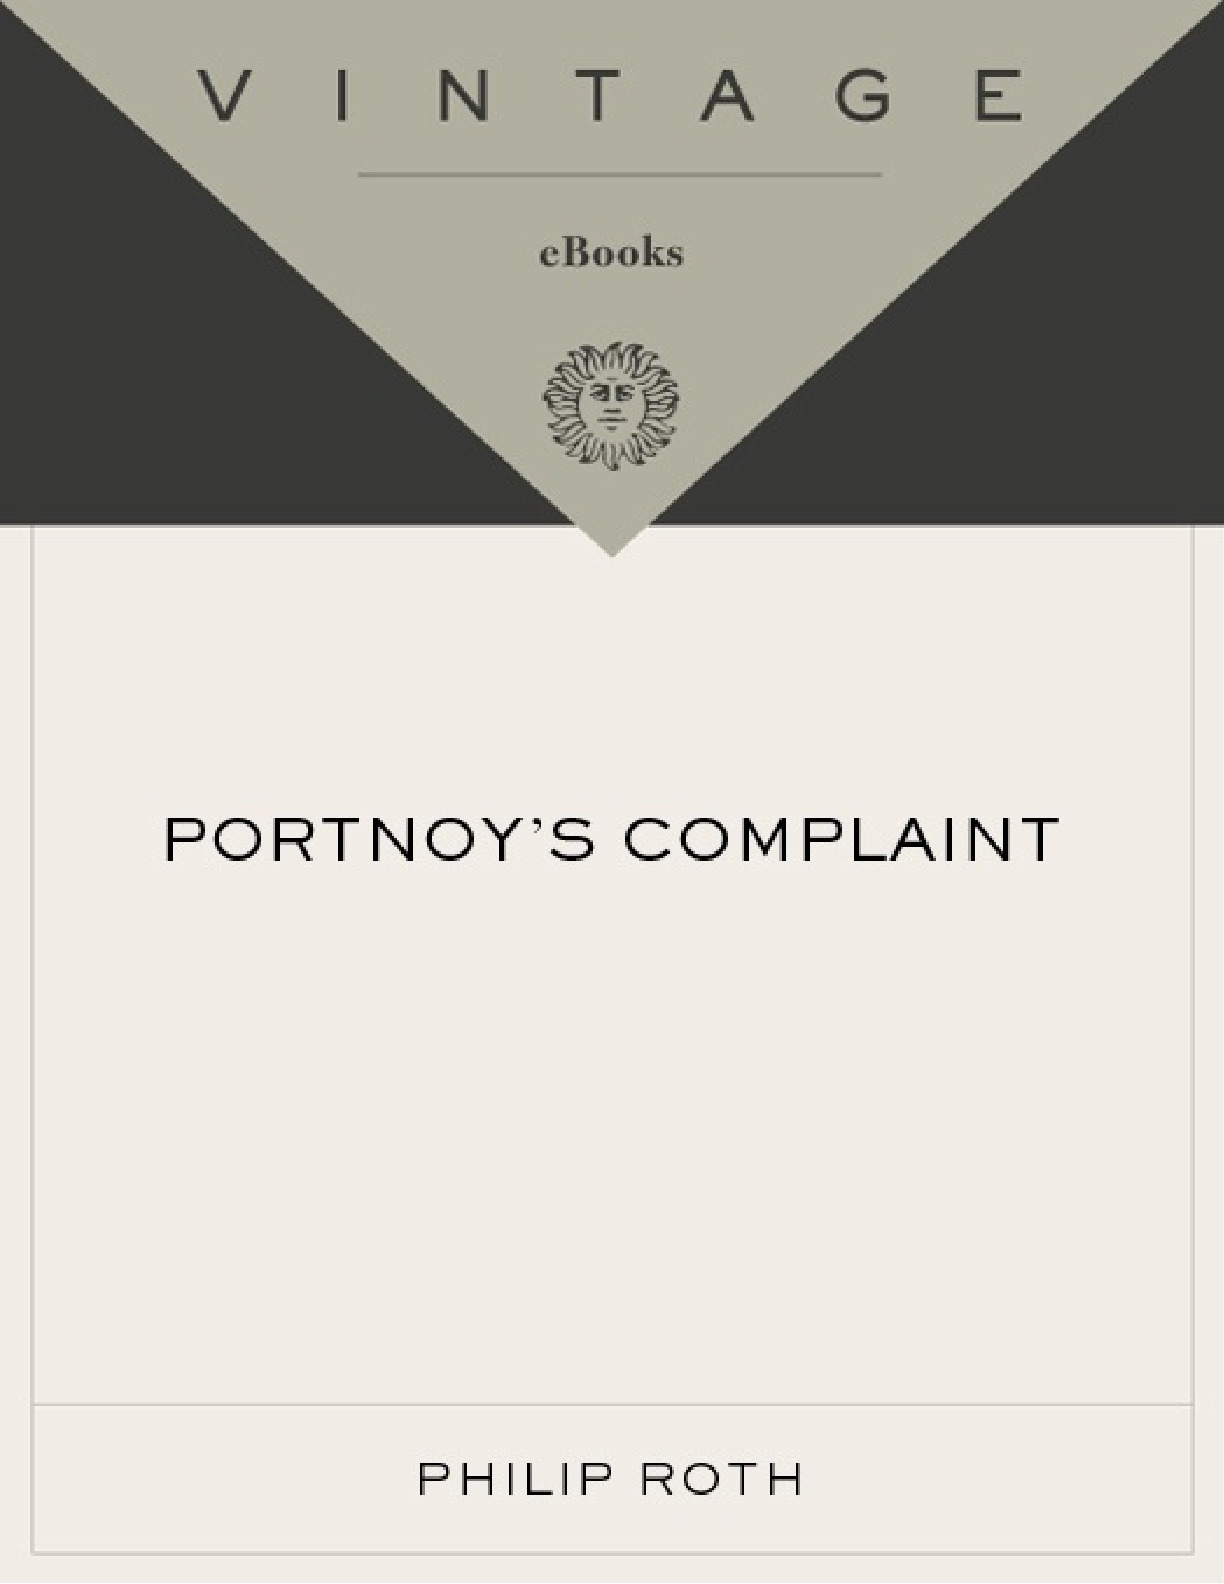 Portnoy’s Complaint – Philip Roth